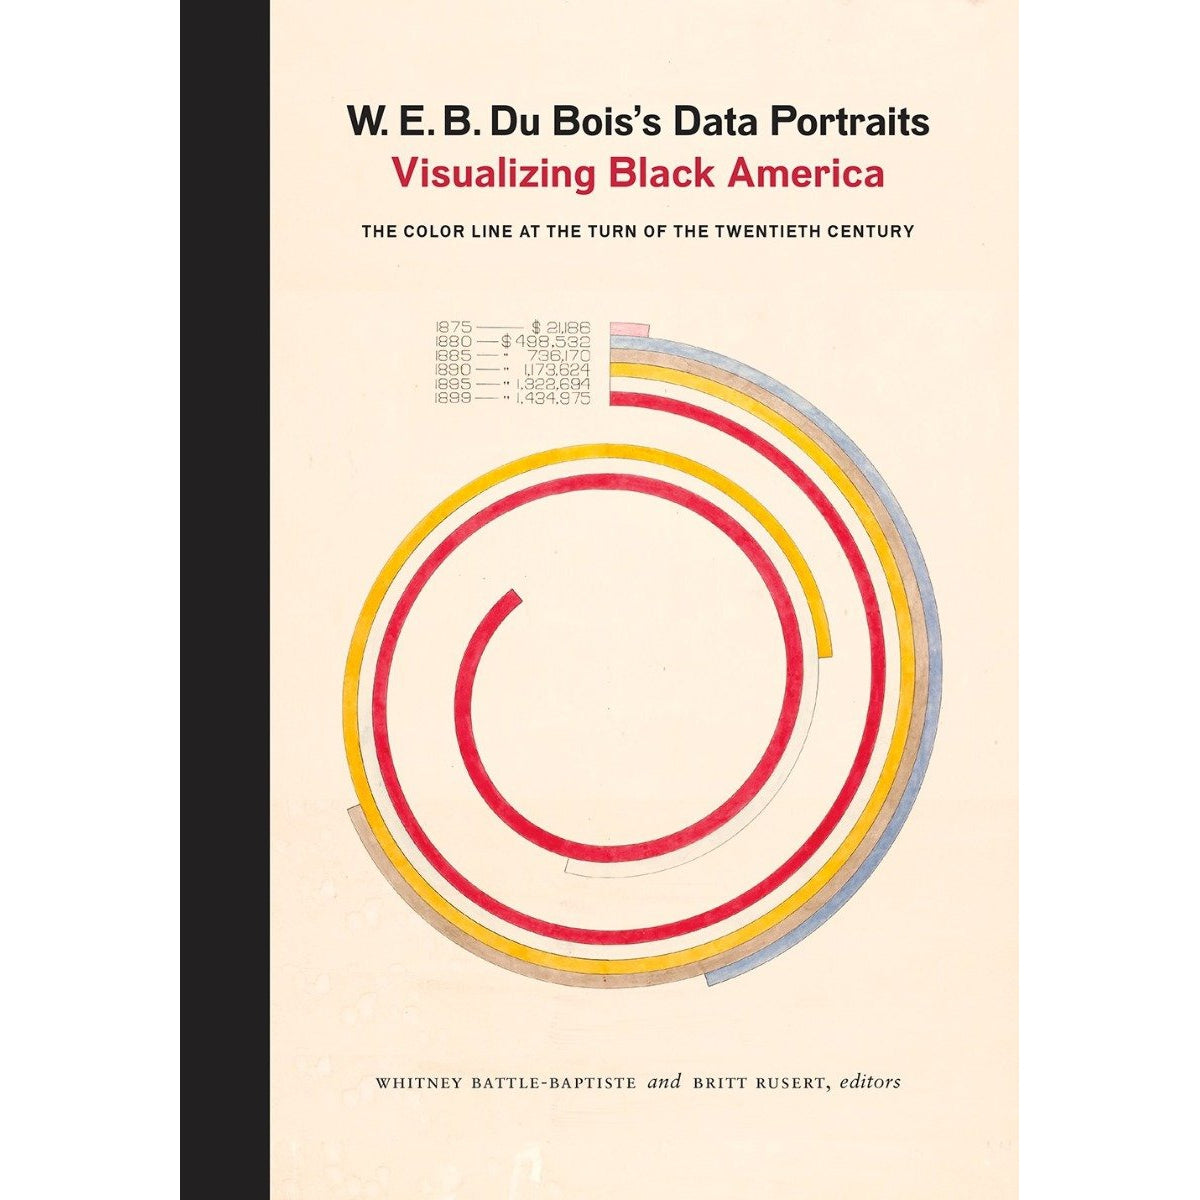 W.E.B. Du Bois Data Portraits: Visualizing Black America&#39;s front cover.